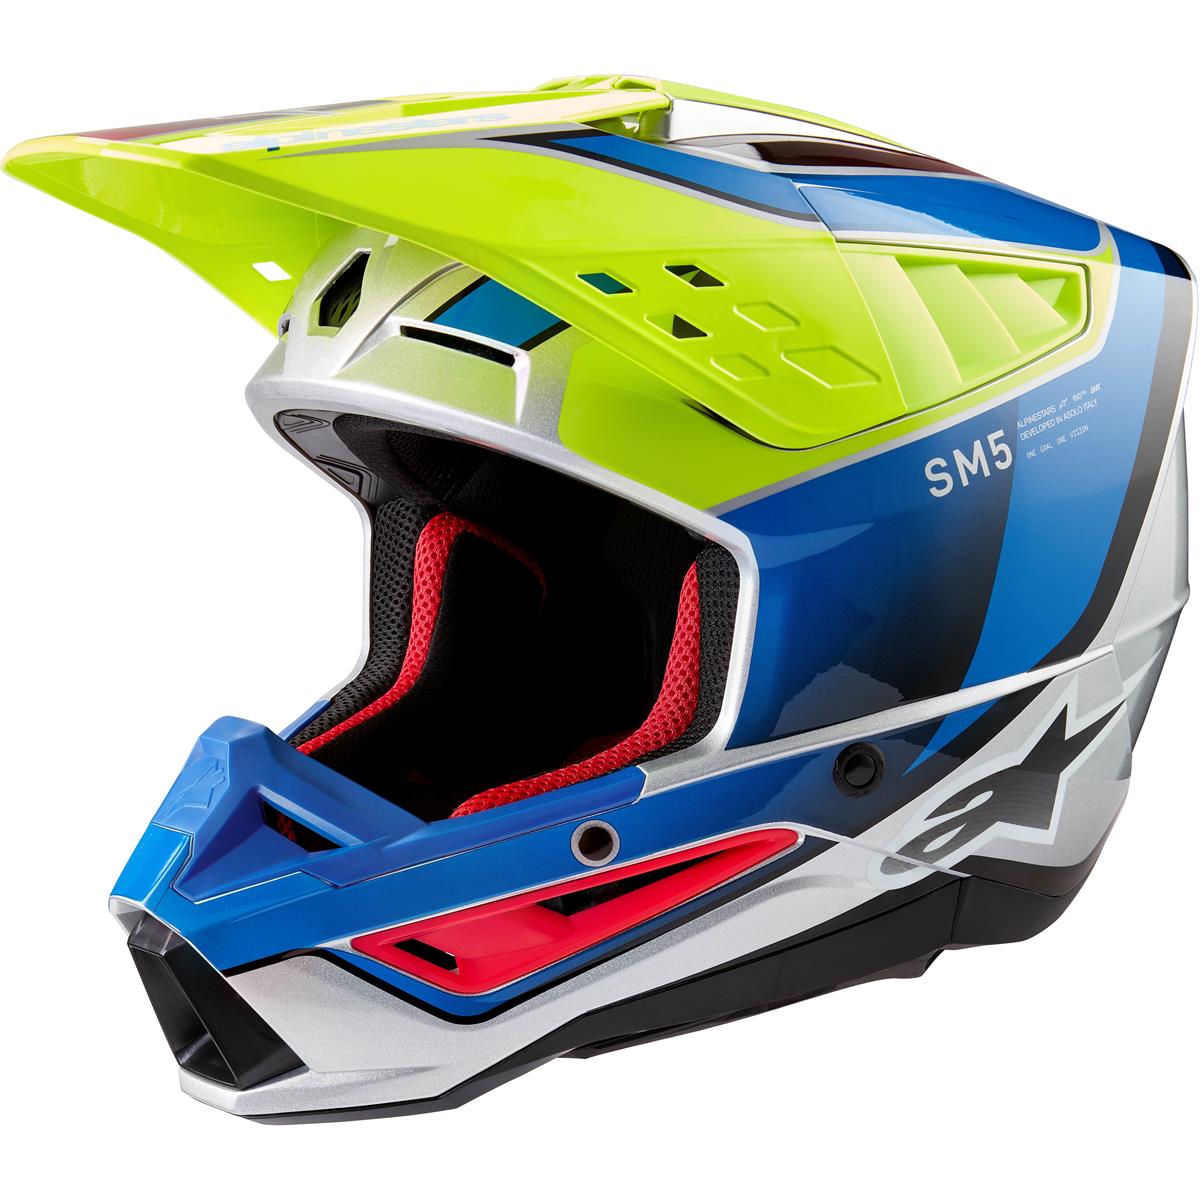 Alpinestars Motocross-Helm S-M5 Sail - Flo Gelb/Blau/Silber/Glossy